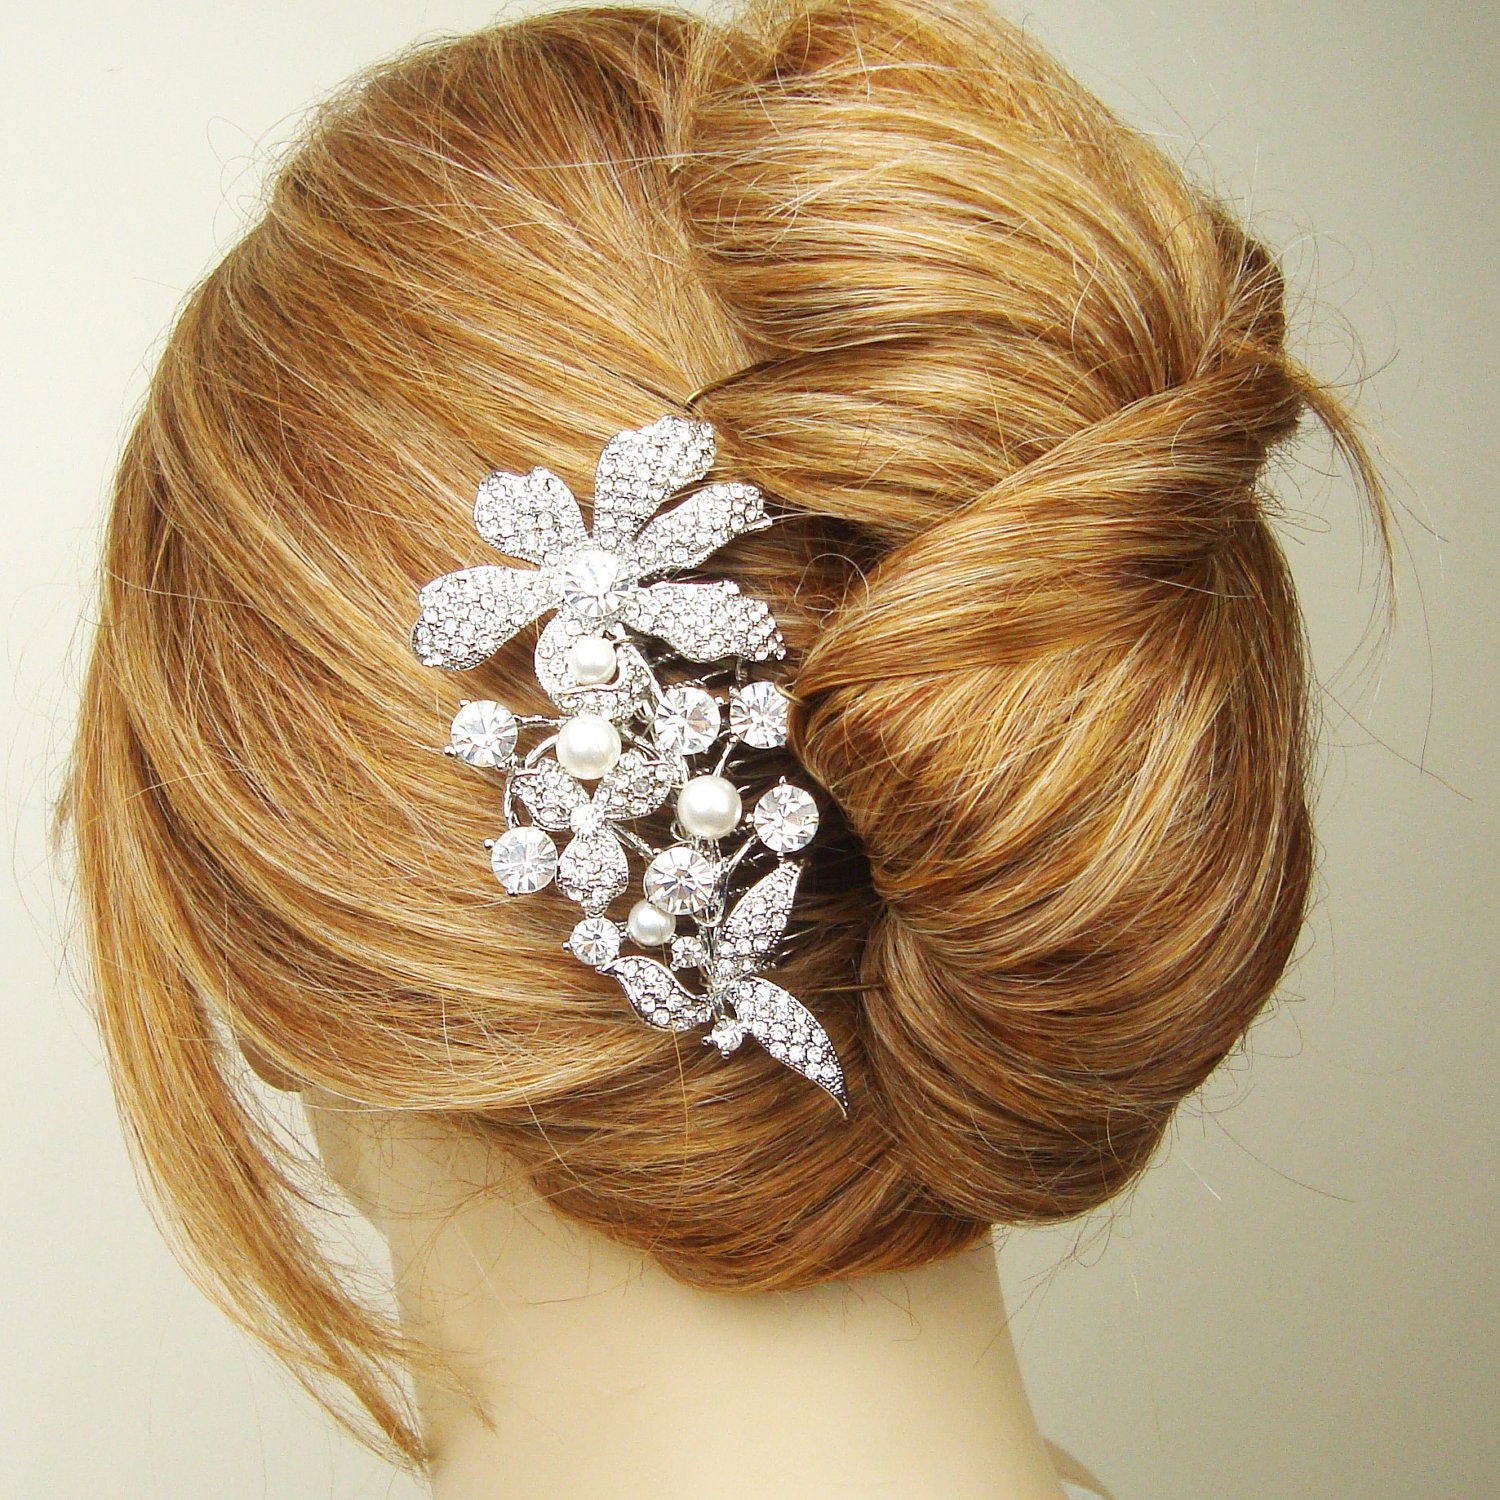 Vintage Style Bridal Hair Accessories Wedding Hair Comb